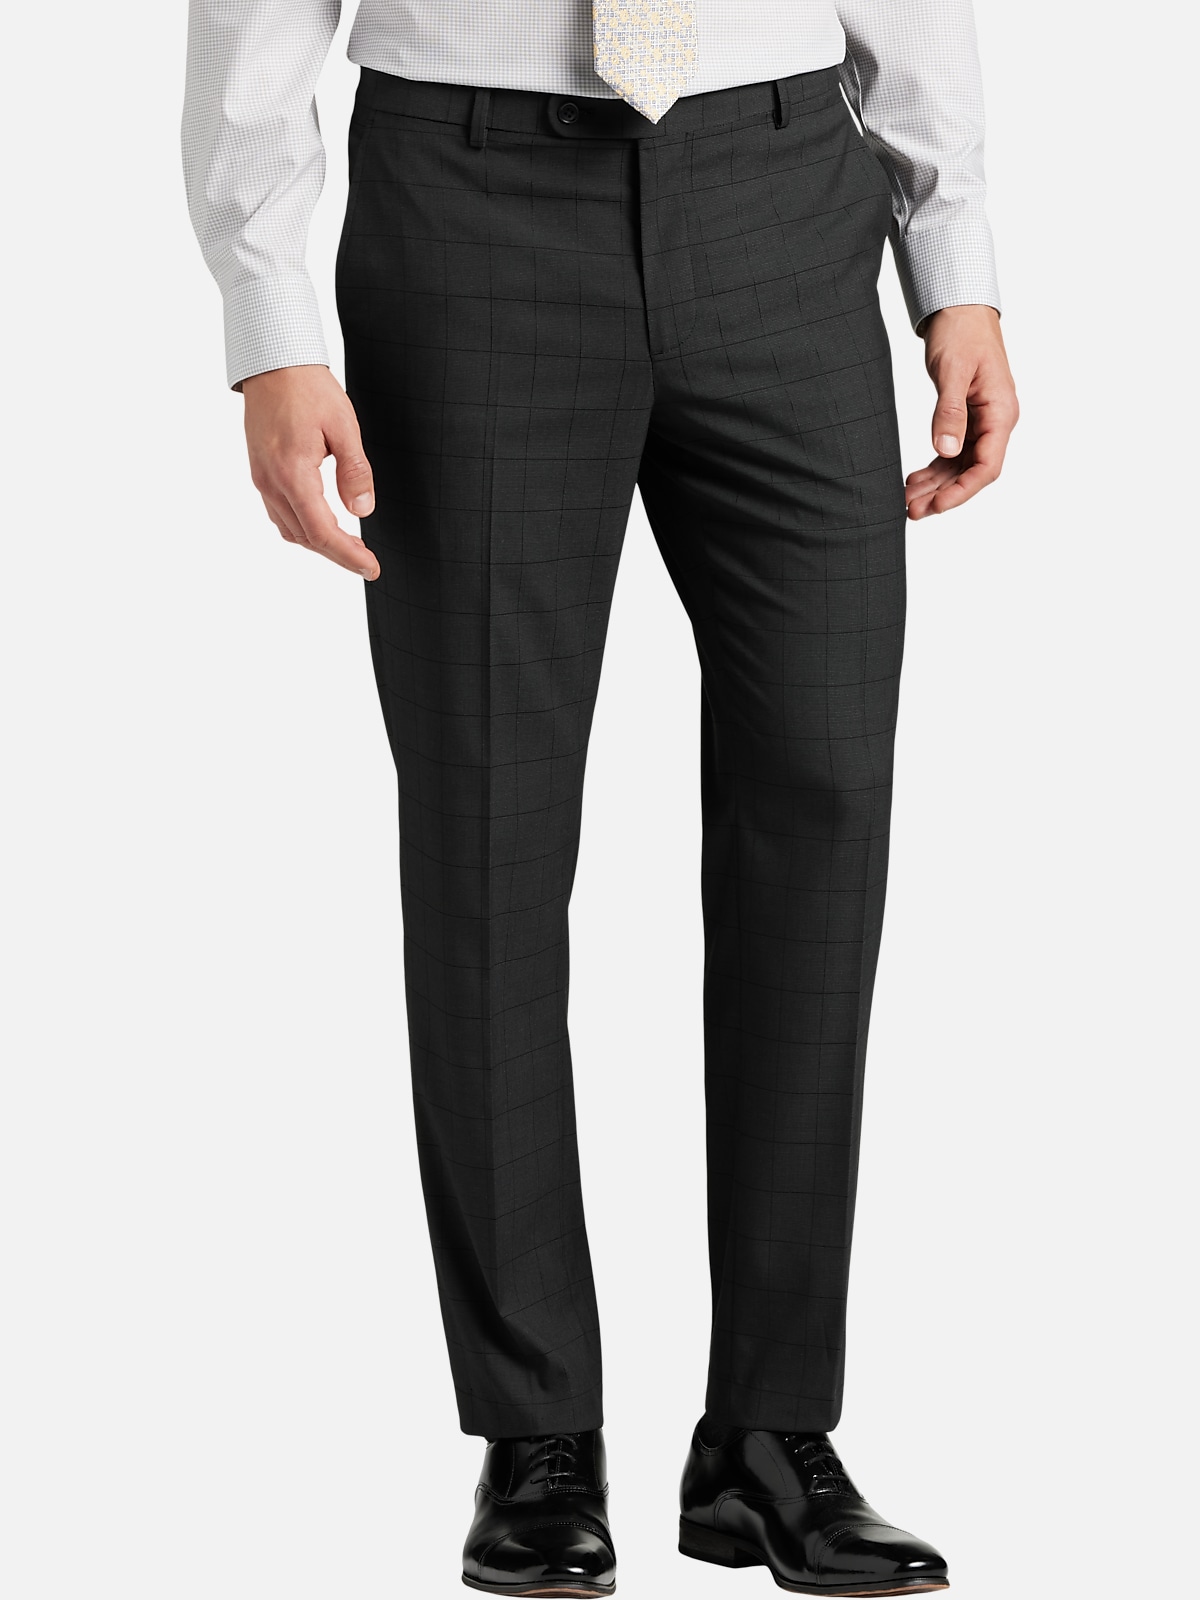 Wilke-Rodriguez Slim Fit Suit Separates Pants | Pants| Men's Wearhouse